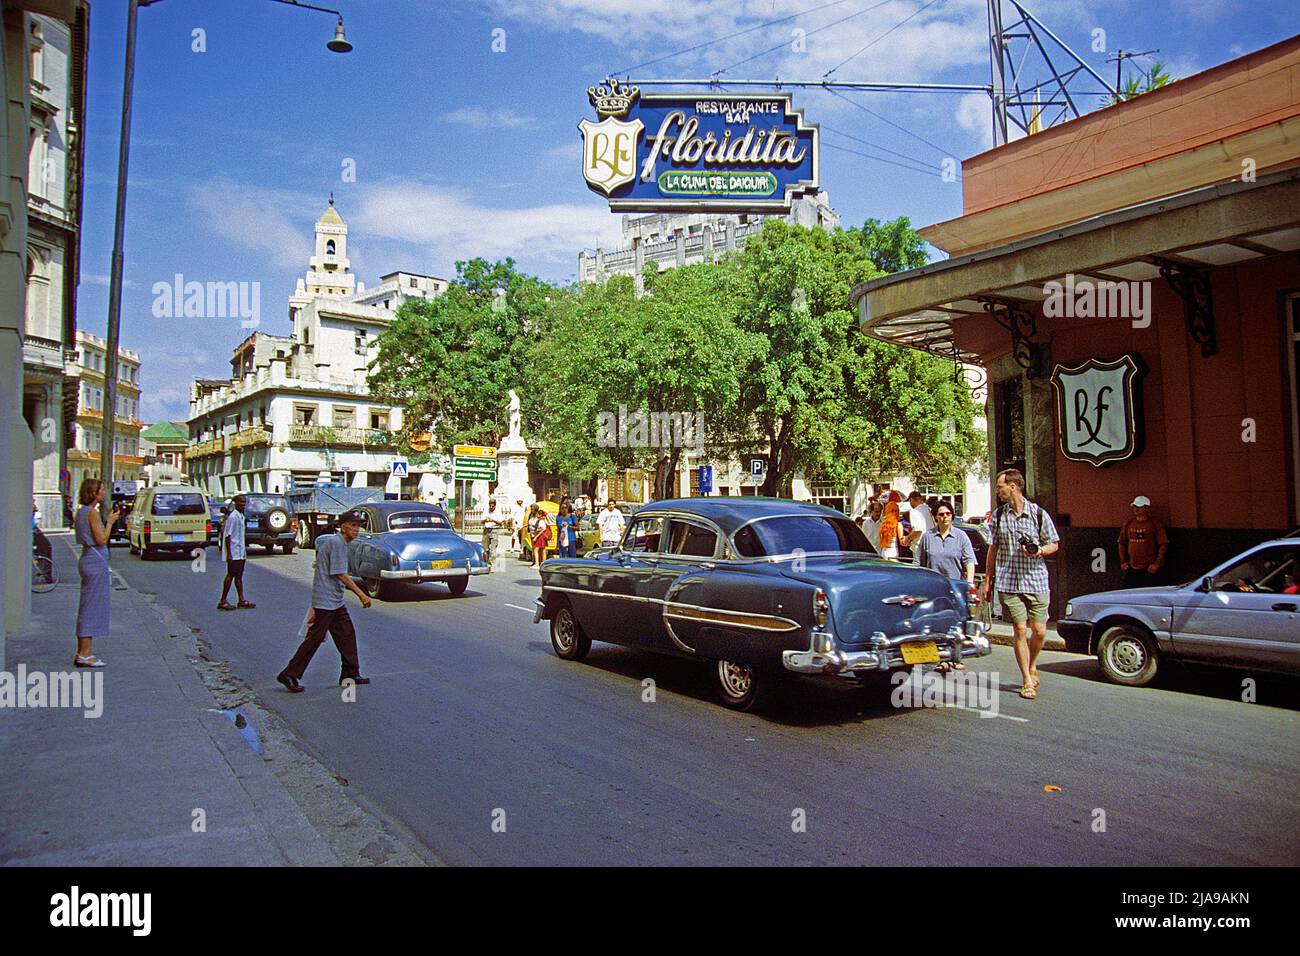 El Floridita, ancien bar favori d'Ernest Hemingway, aujourd'hui attraction touristique, El Floridita, la Havane, Cuba, Caraïbes Banque D'Images